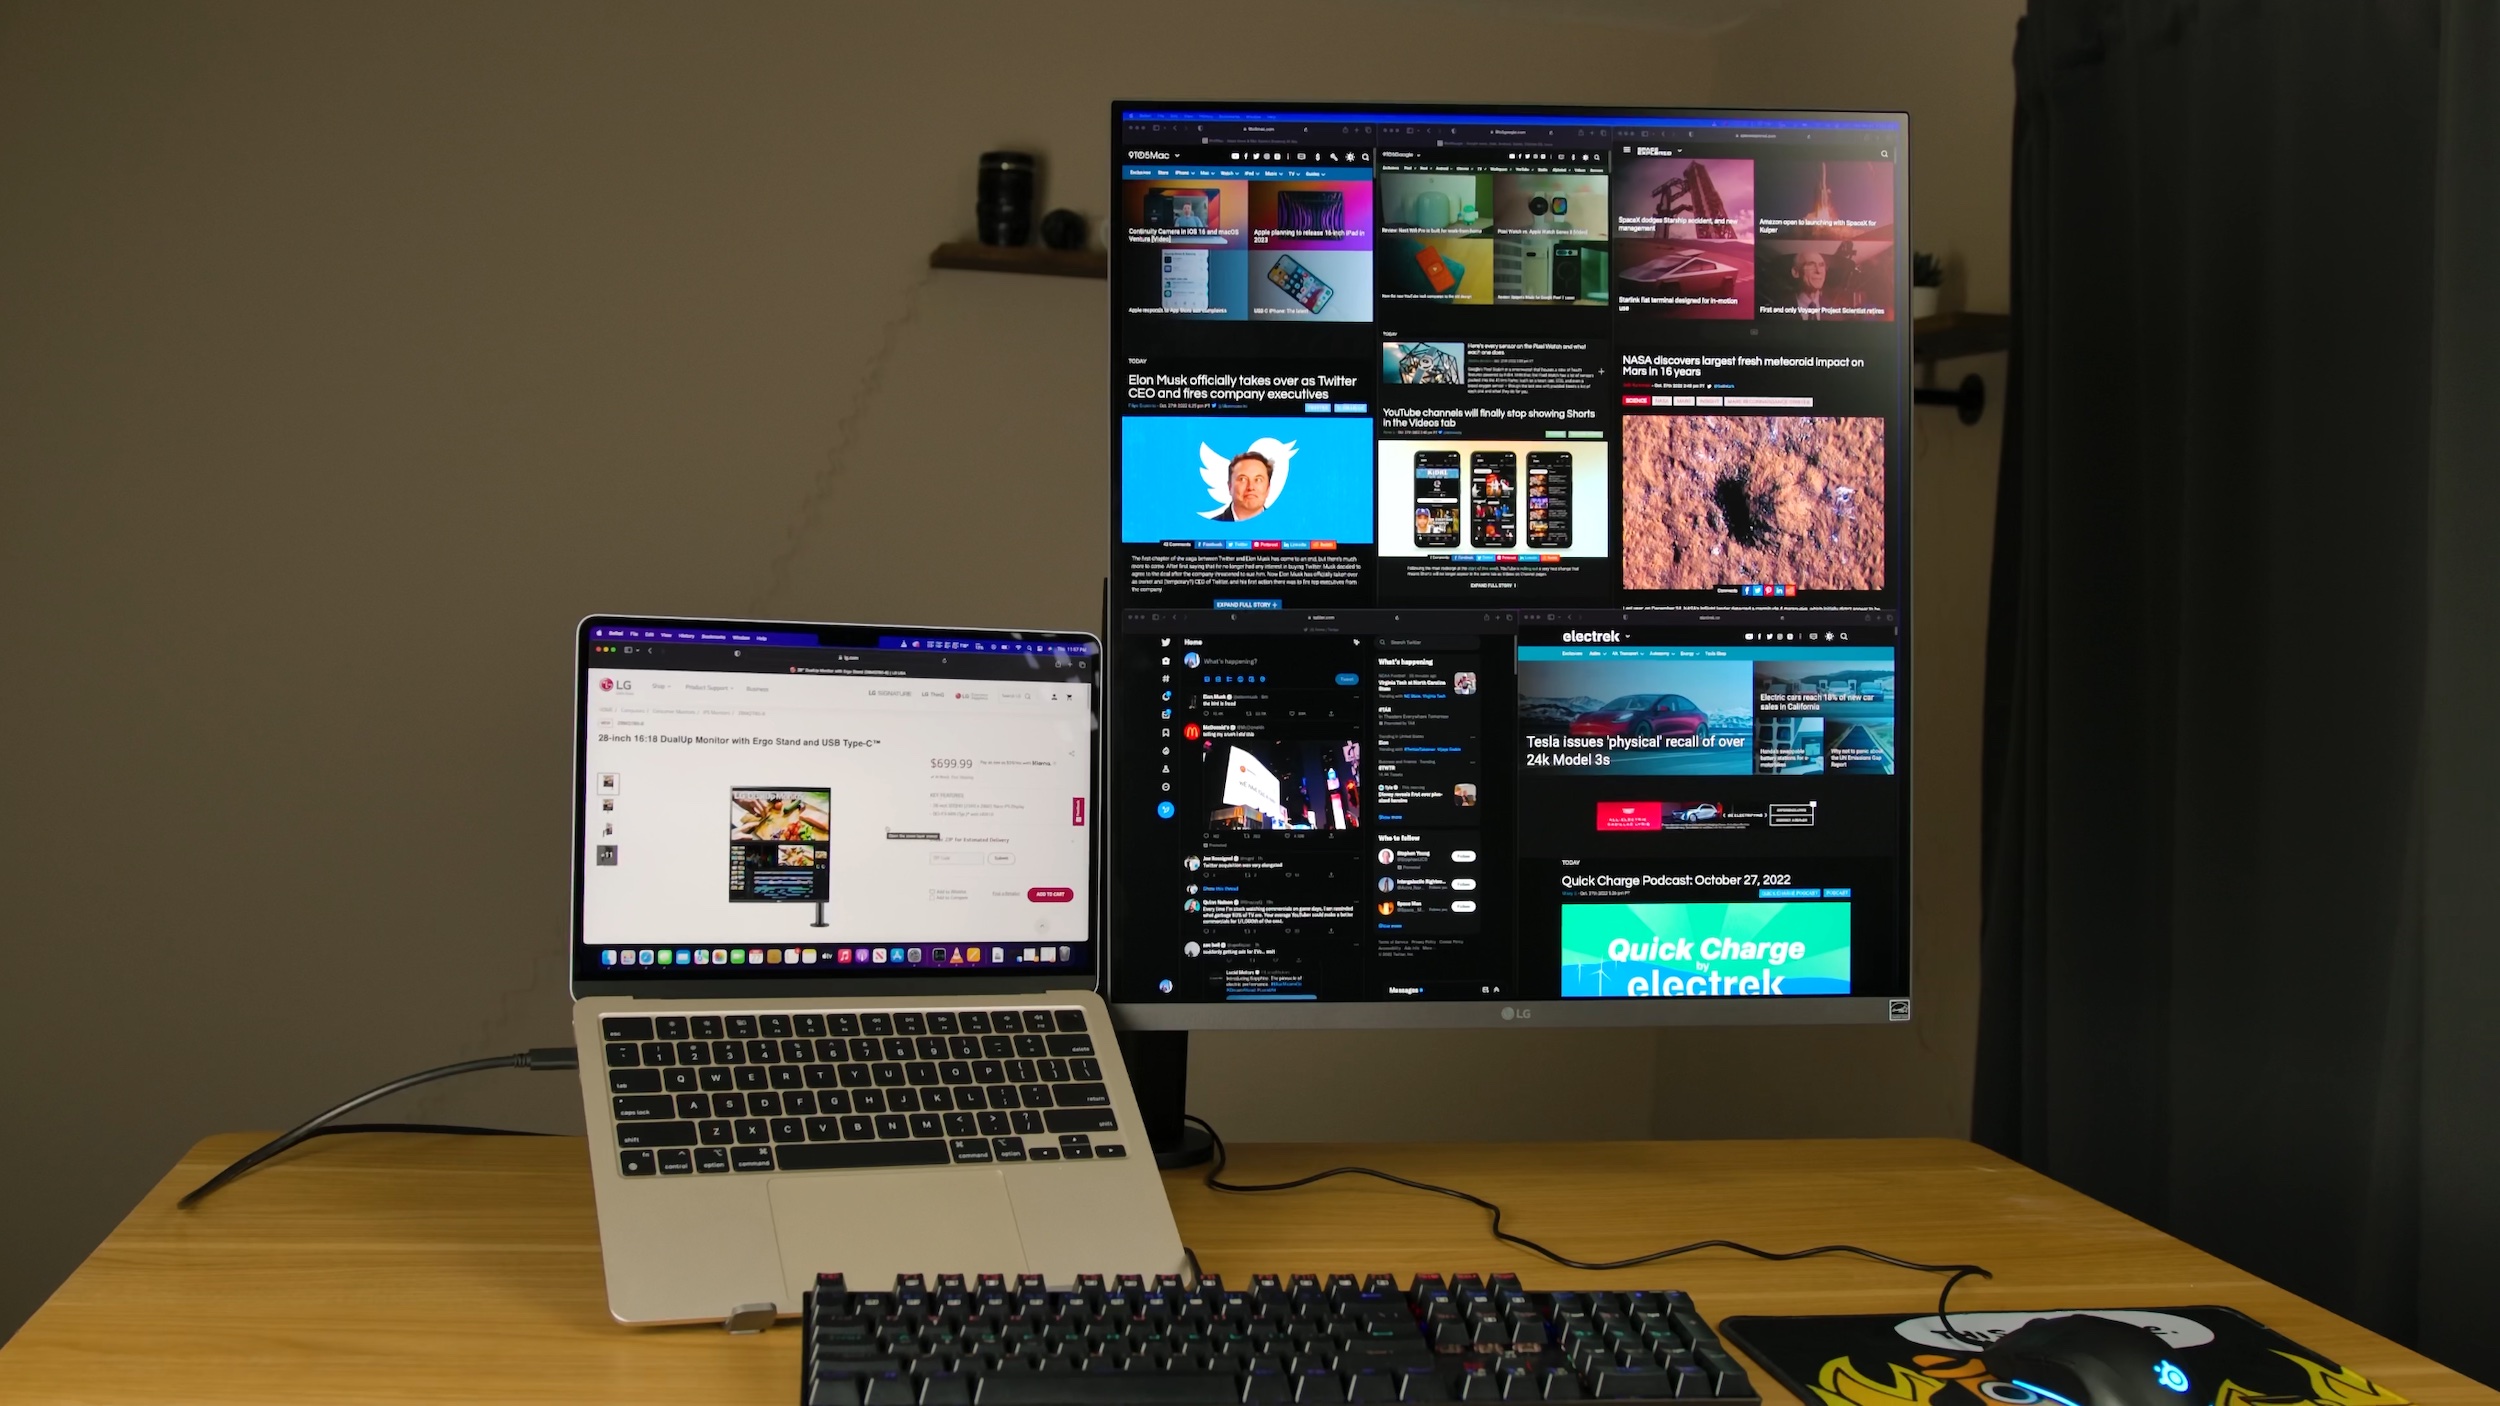 Mac Studio pairs well with LG ultra-wide 5K display [Setups]